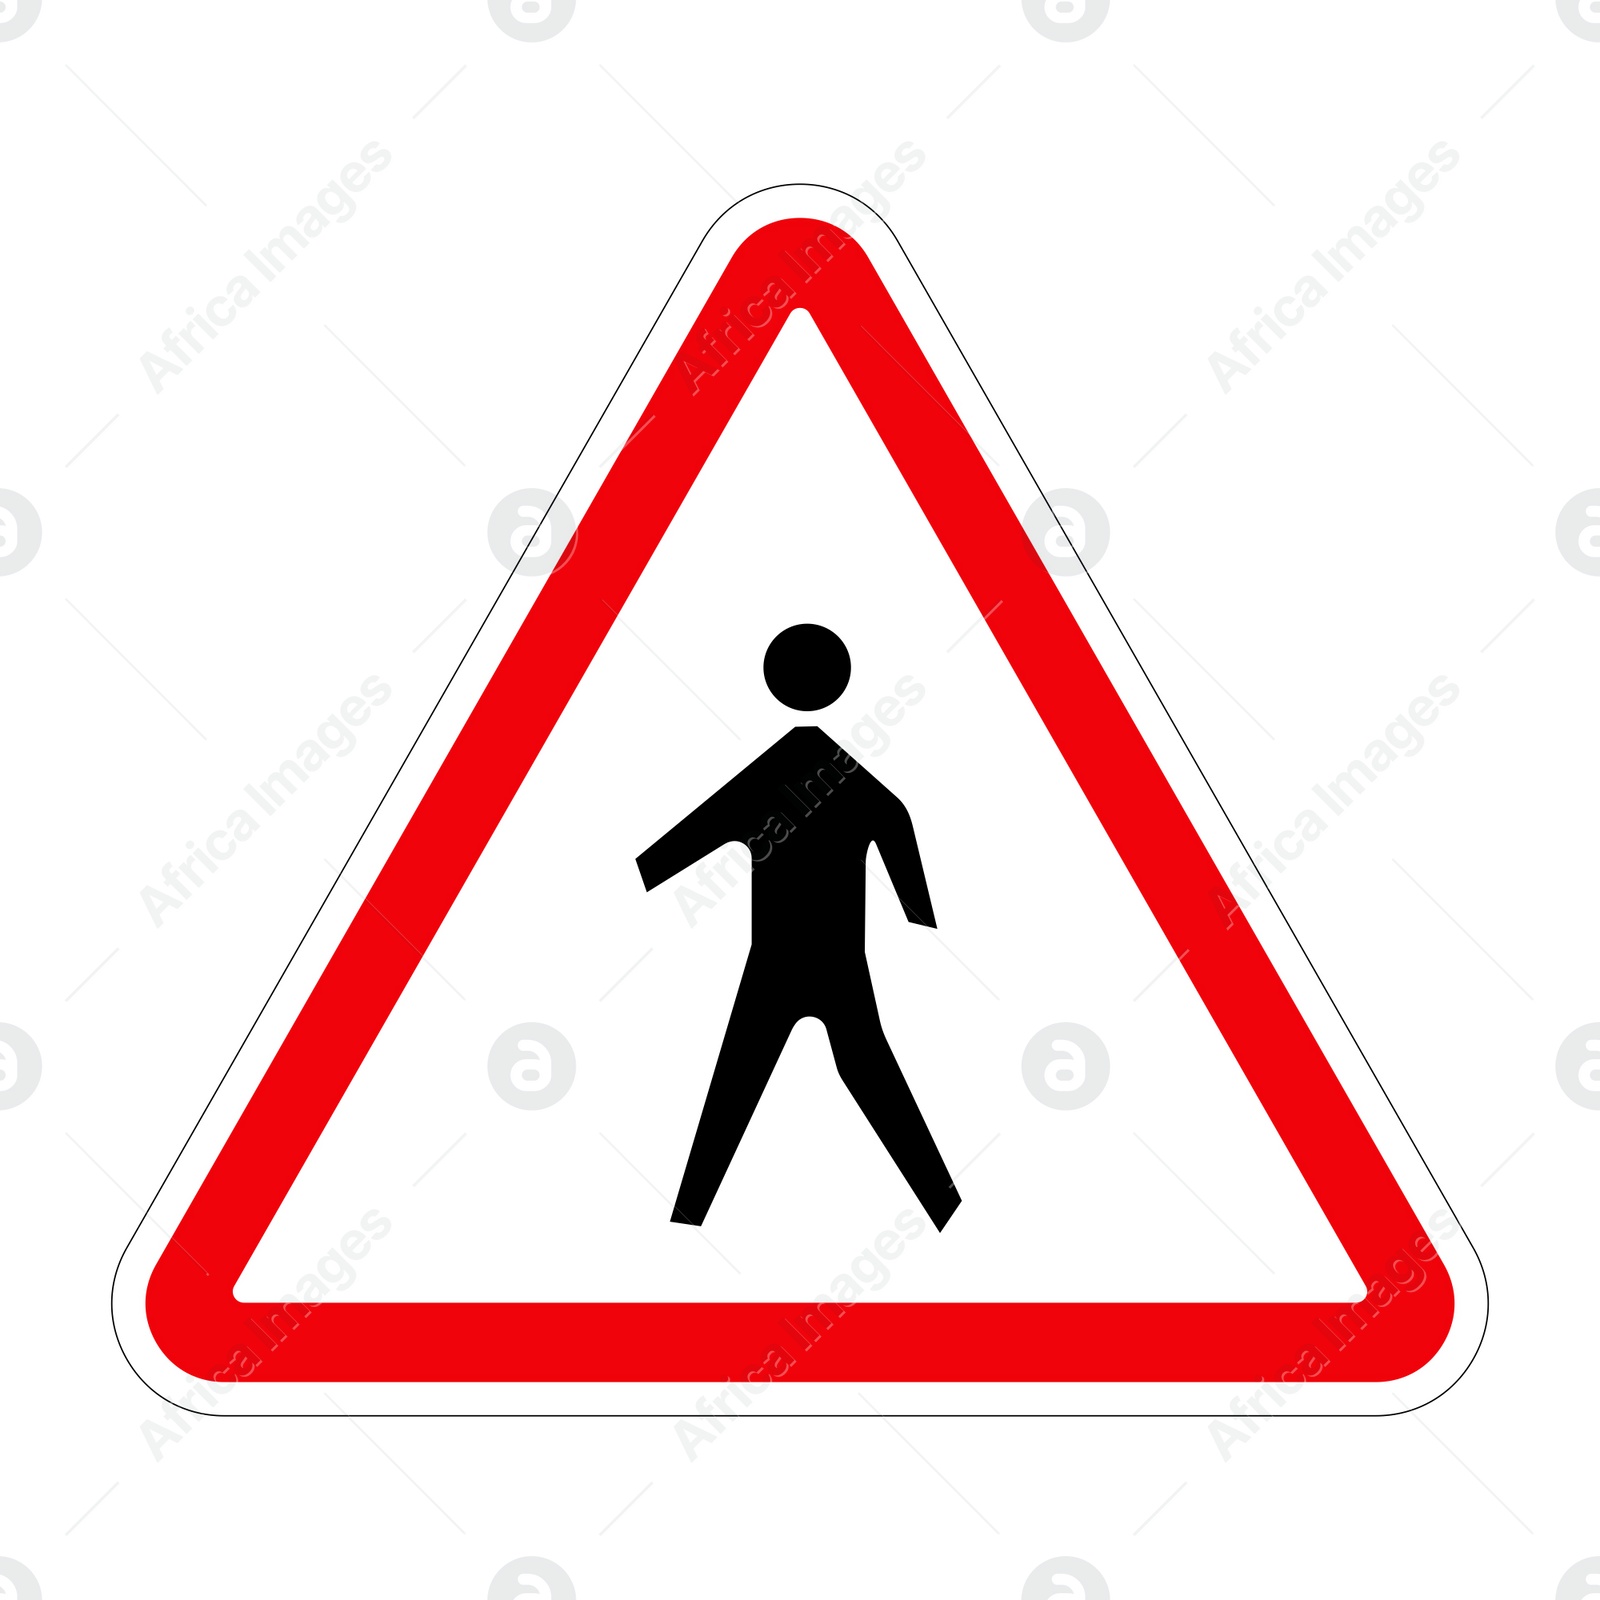 Illustration of Traffic sign PEDESTRIANS on white background, illustration